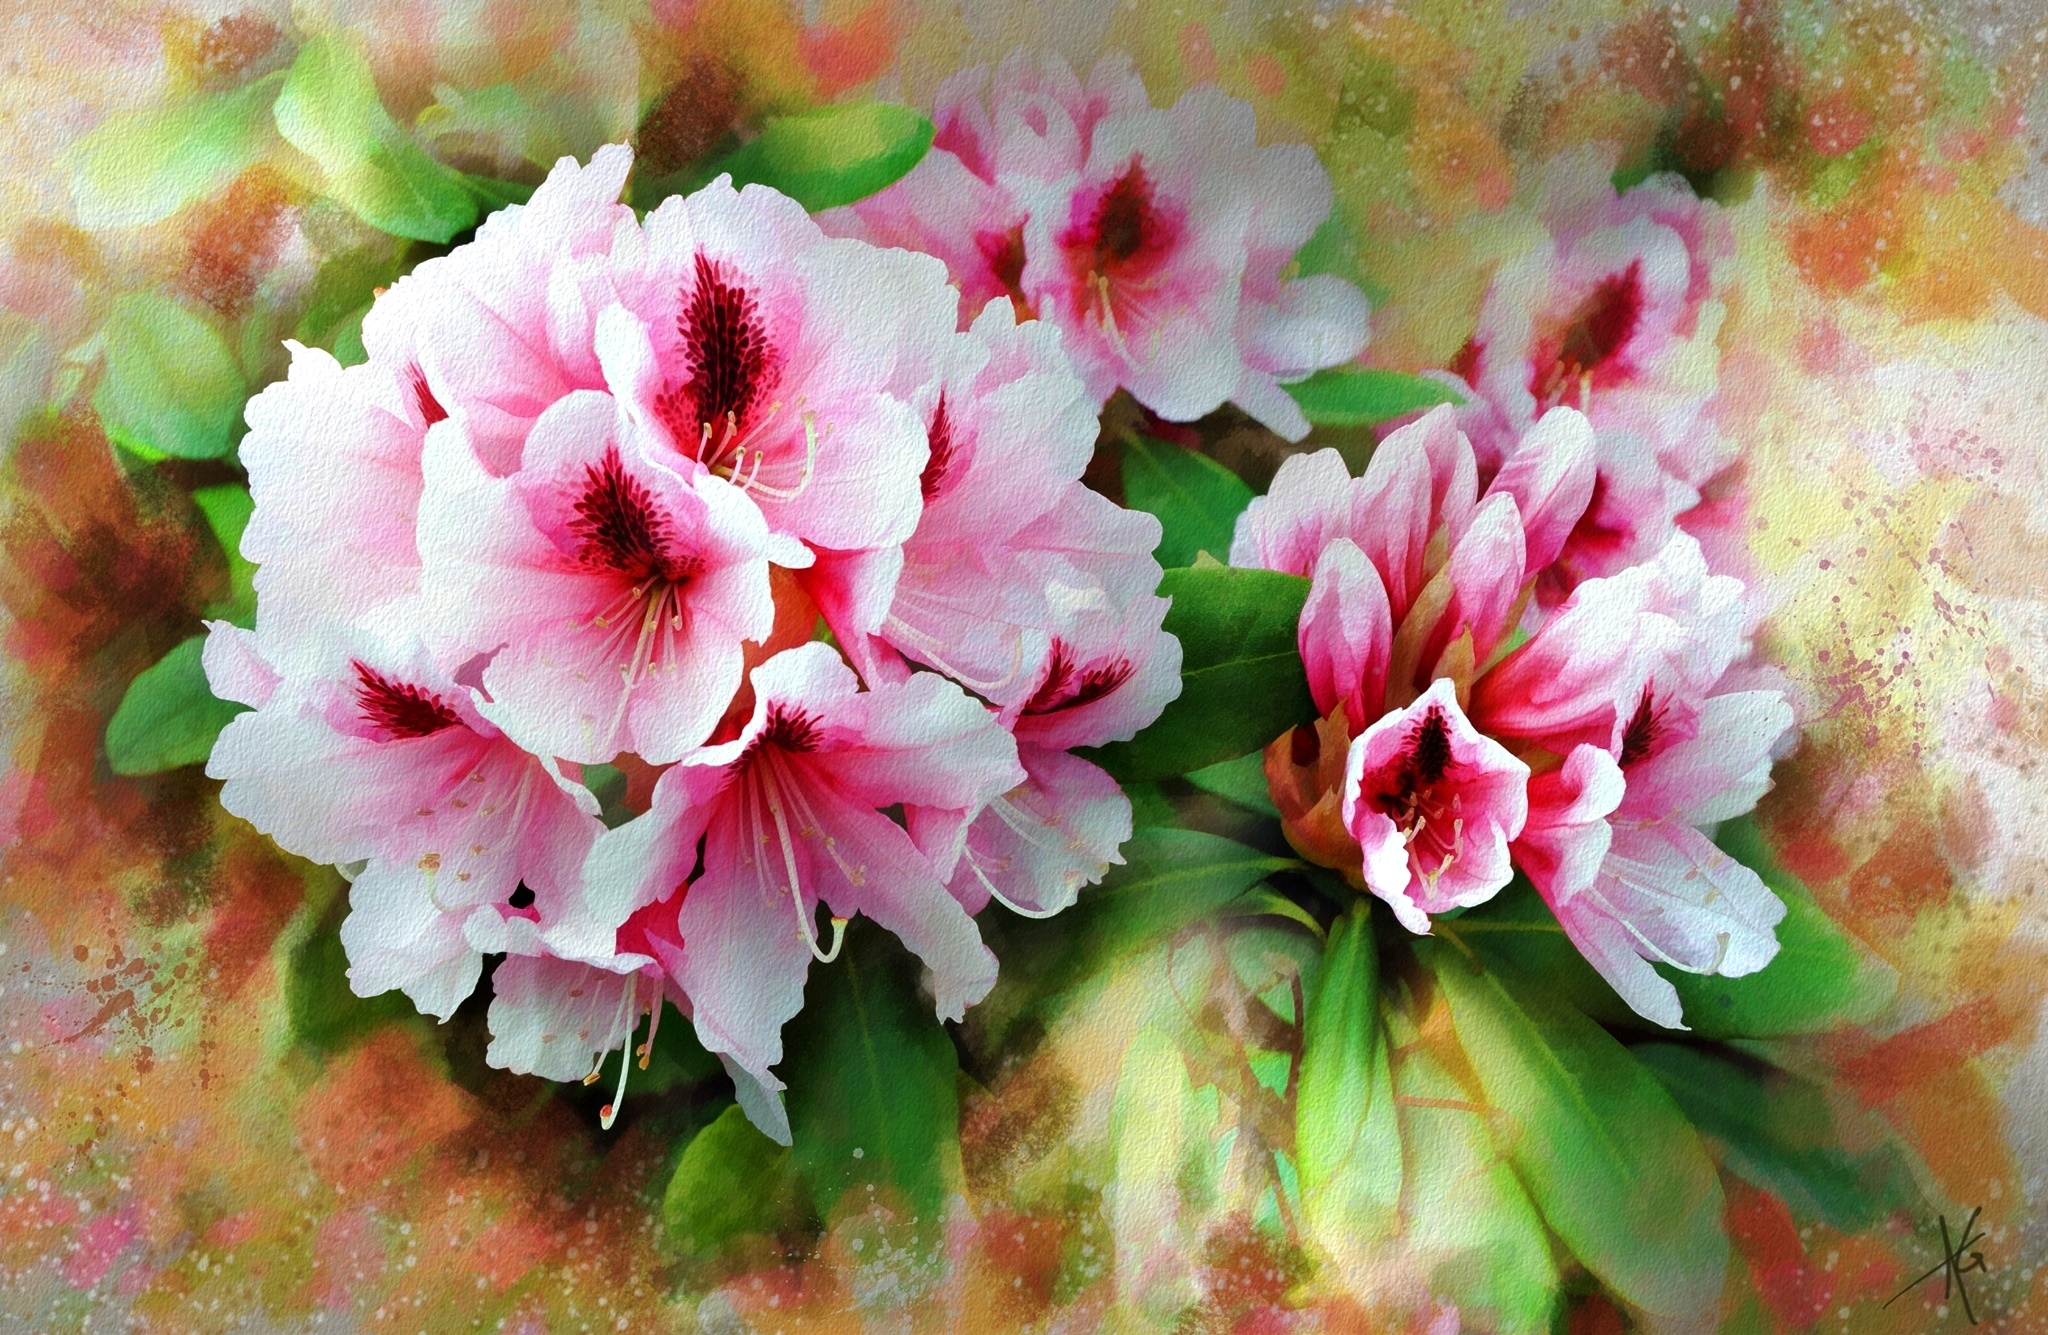 Rododendron, Różanecznik, Kwiaty, Akwarela, Obraz, Alberto Guillen